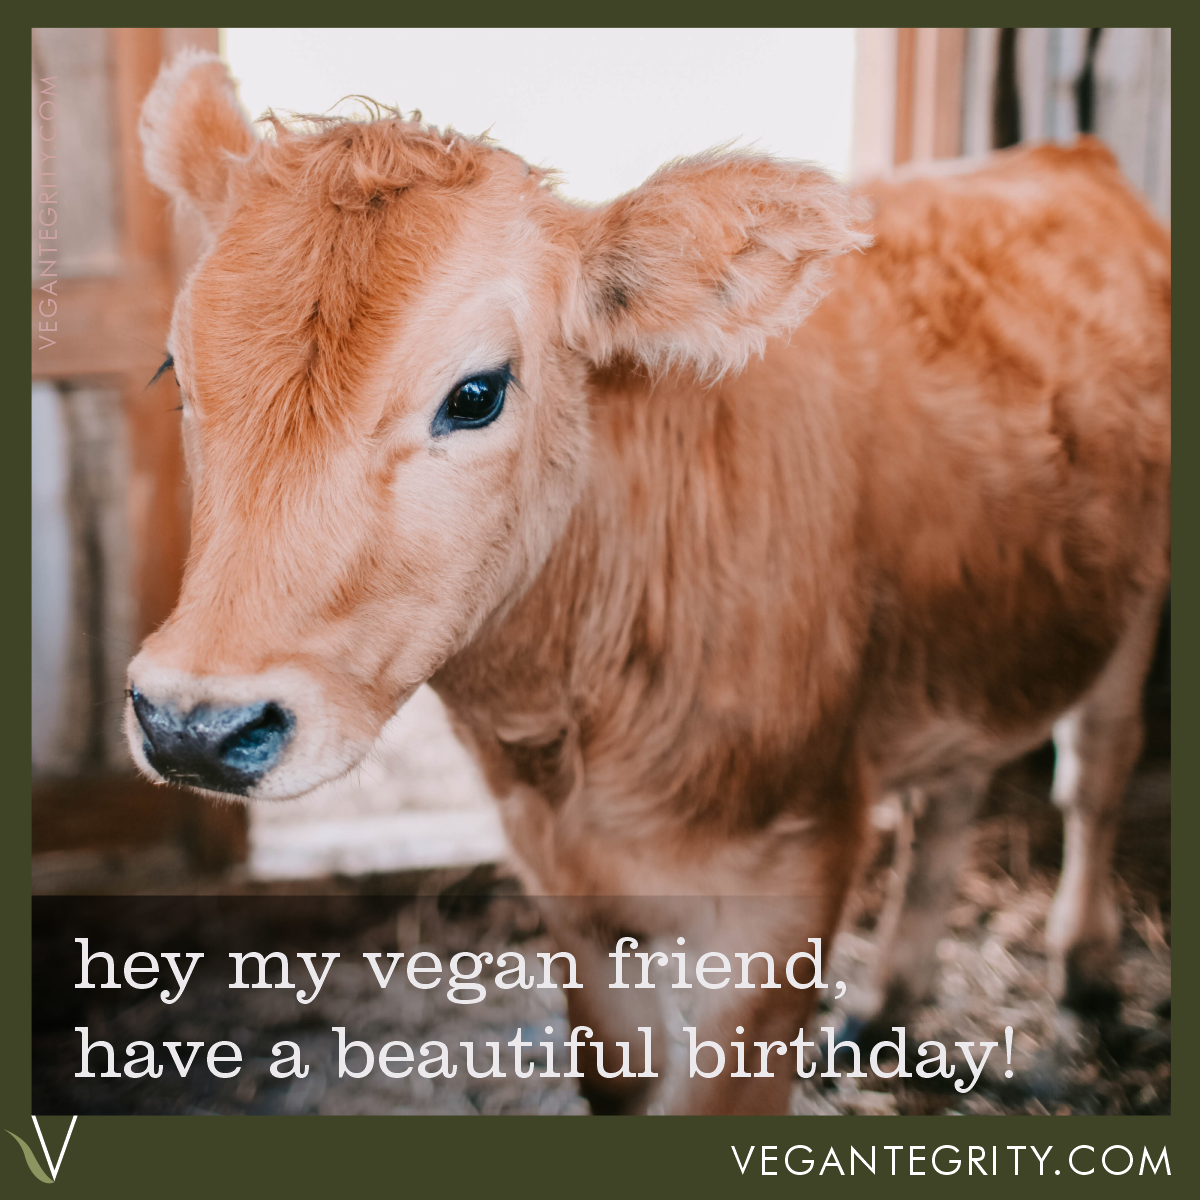 Sweet brown calf - hey my vegan friend have a beautiful birthday.